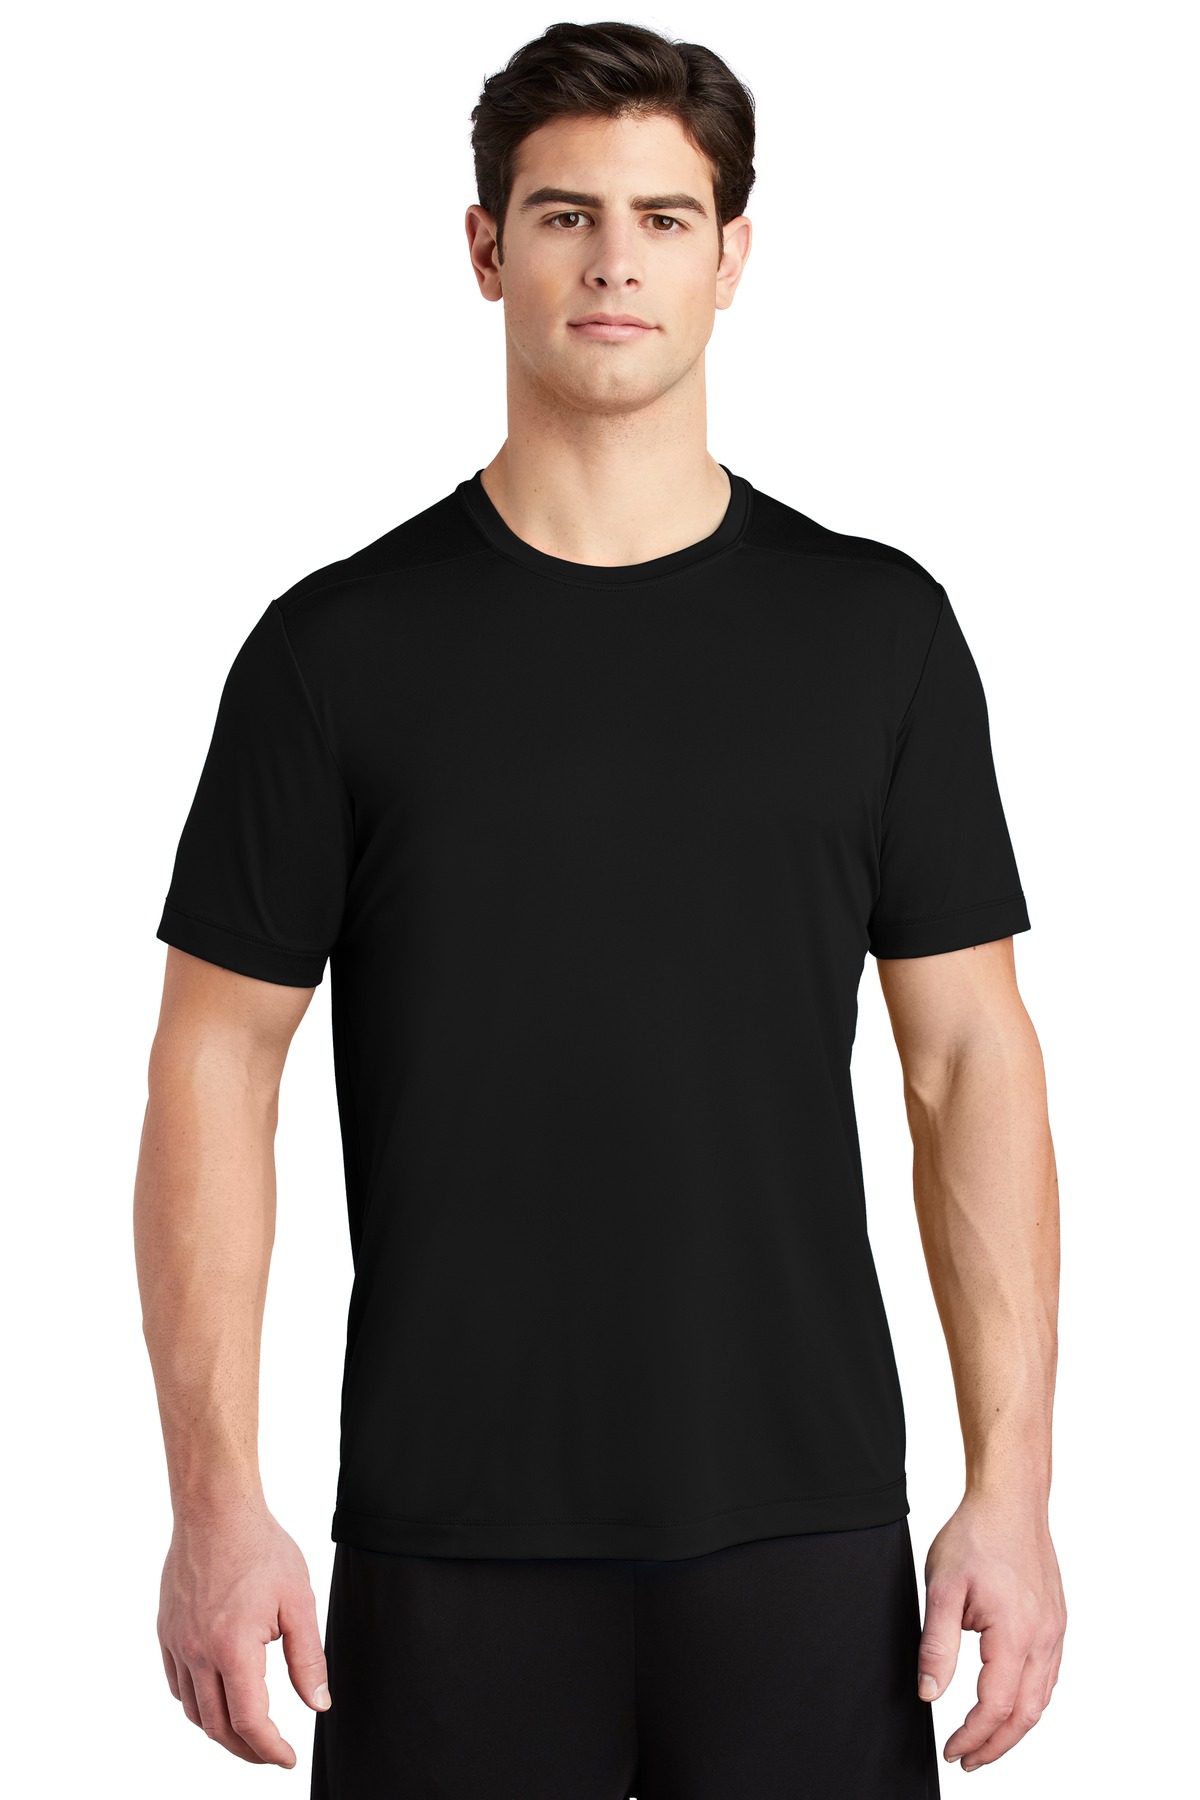 Sport-Tek Activewear T-Shirts for Hospitality ® Posi-UV Pro Tee.-Sport-Tek